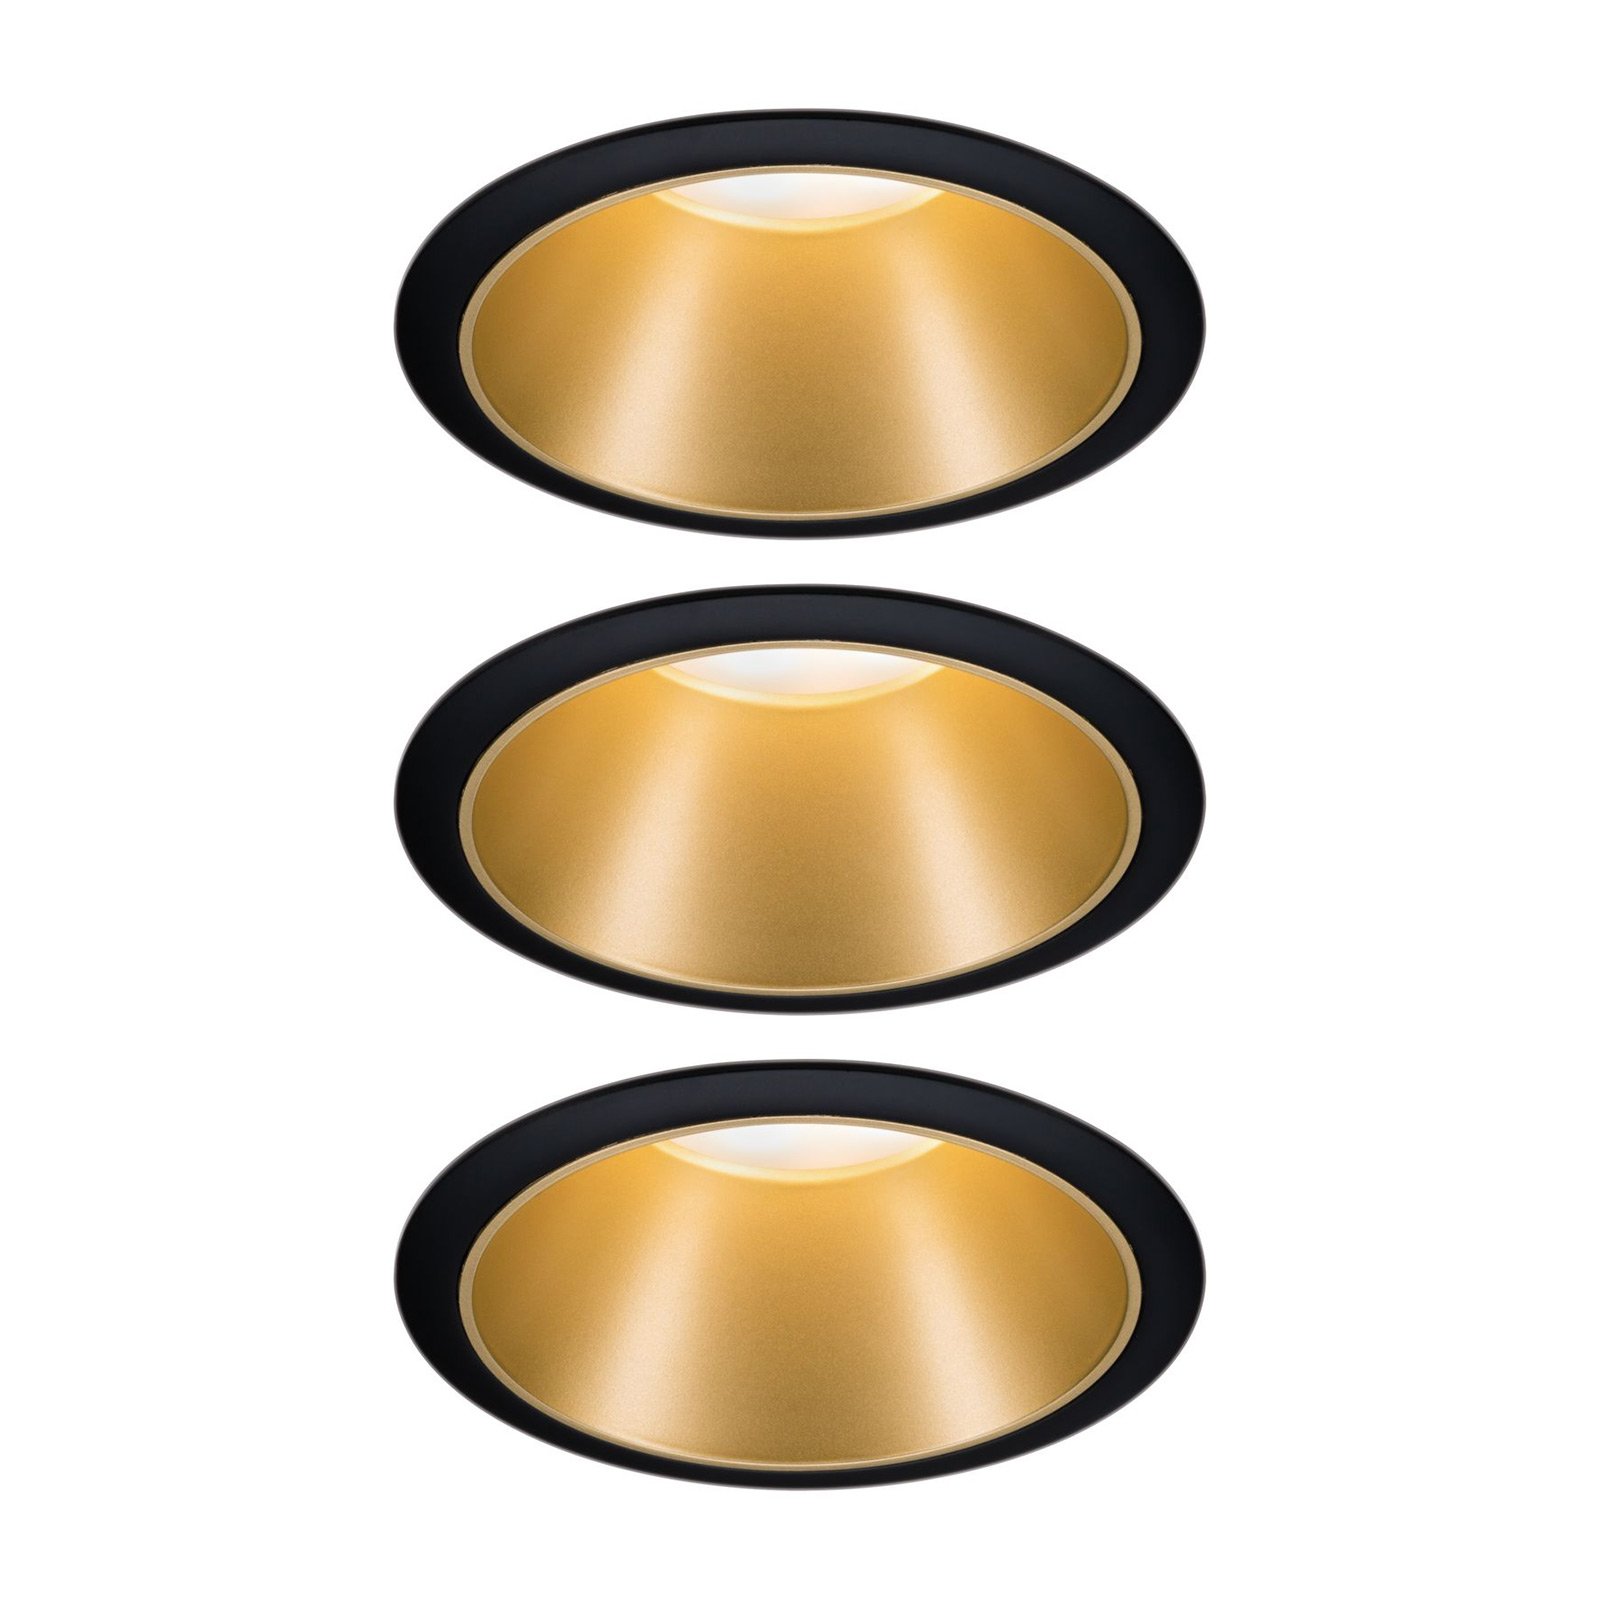 Paulmann Cole LED Spotlight, goud-zwart, 3per set